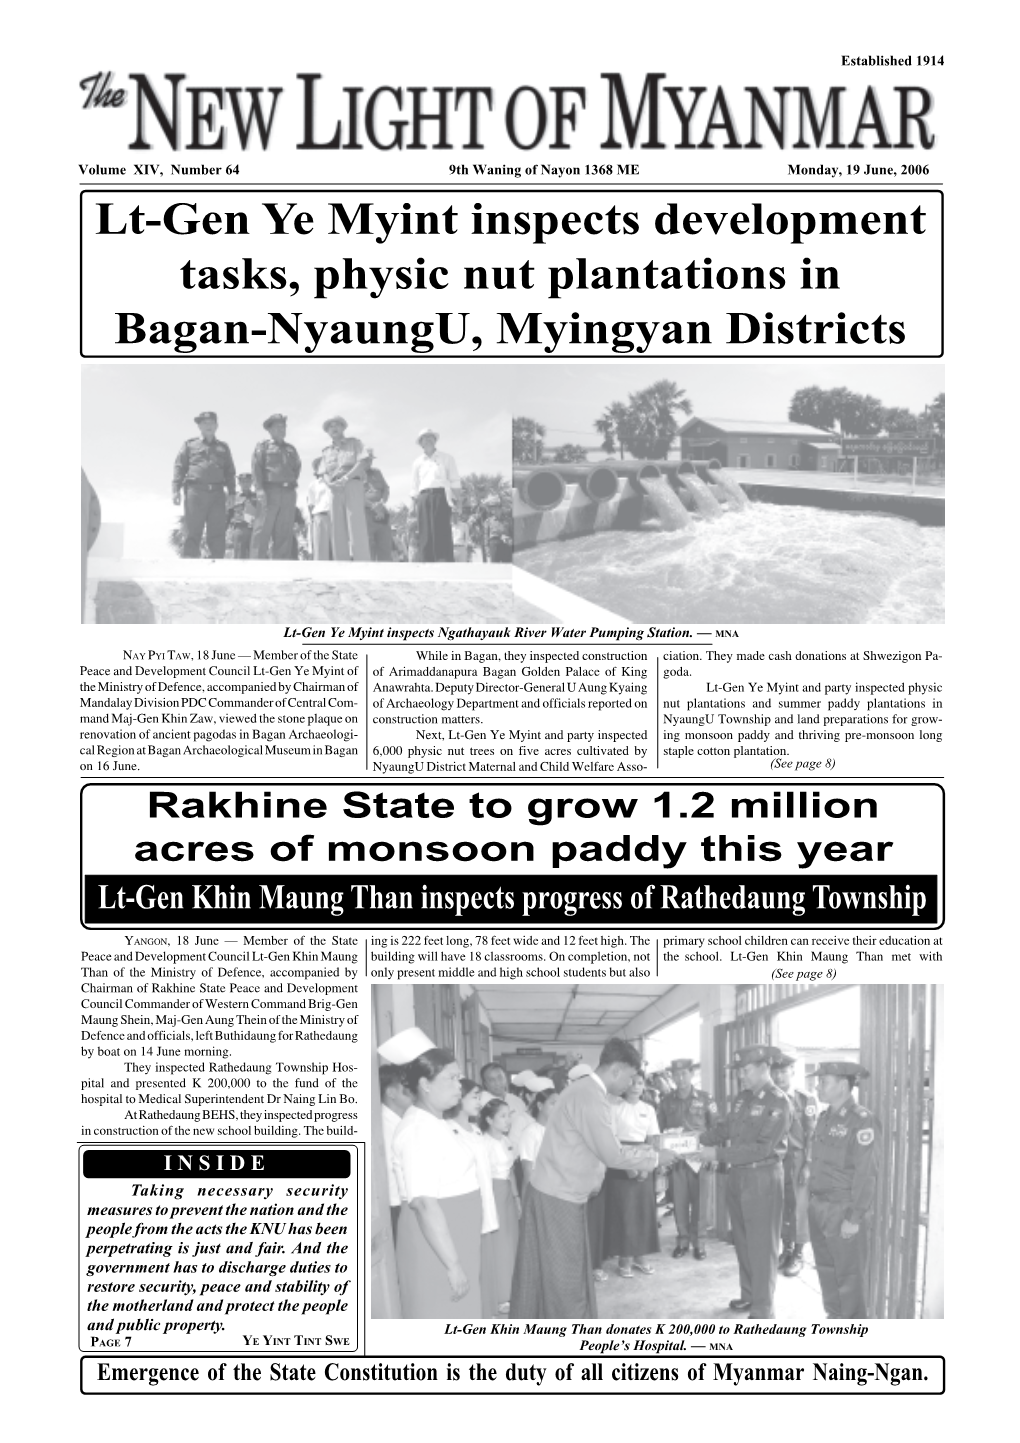 Lt-Gen Ye Myint Inspects Development Tasks, Physic Nut Plantations in Bagan-Nyaungu, Myingyan Districts